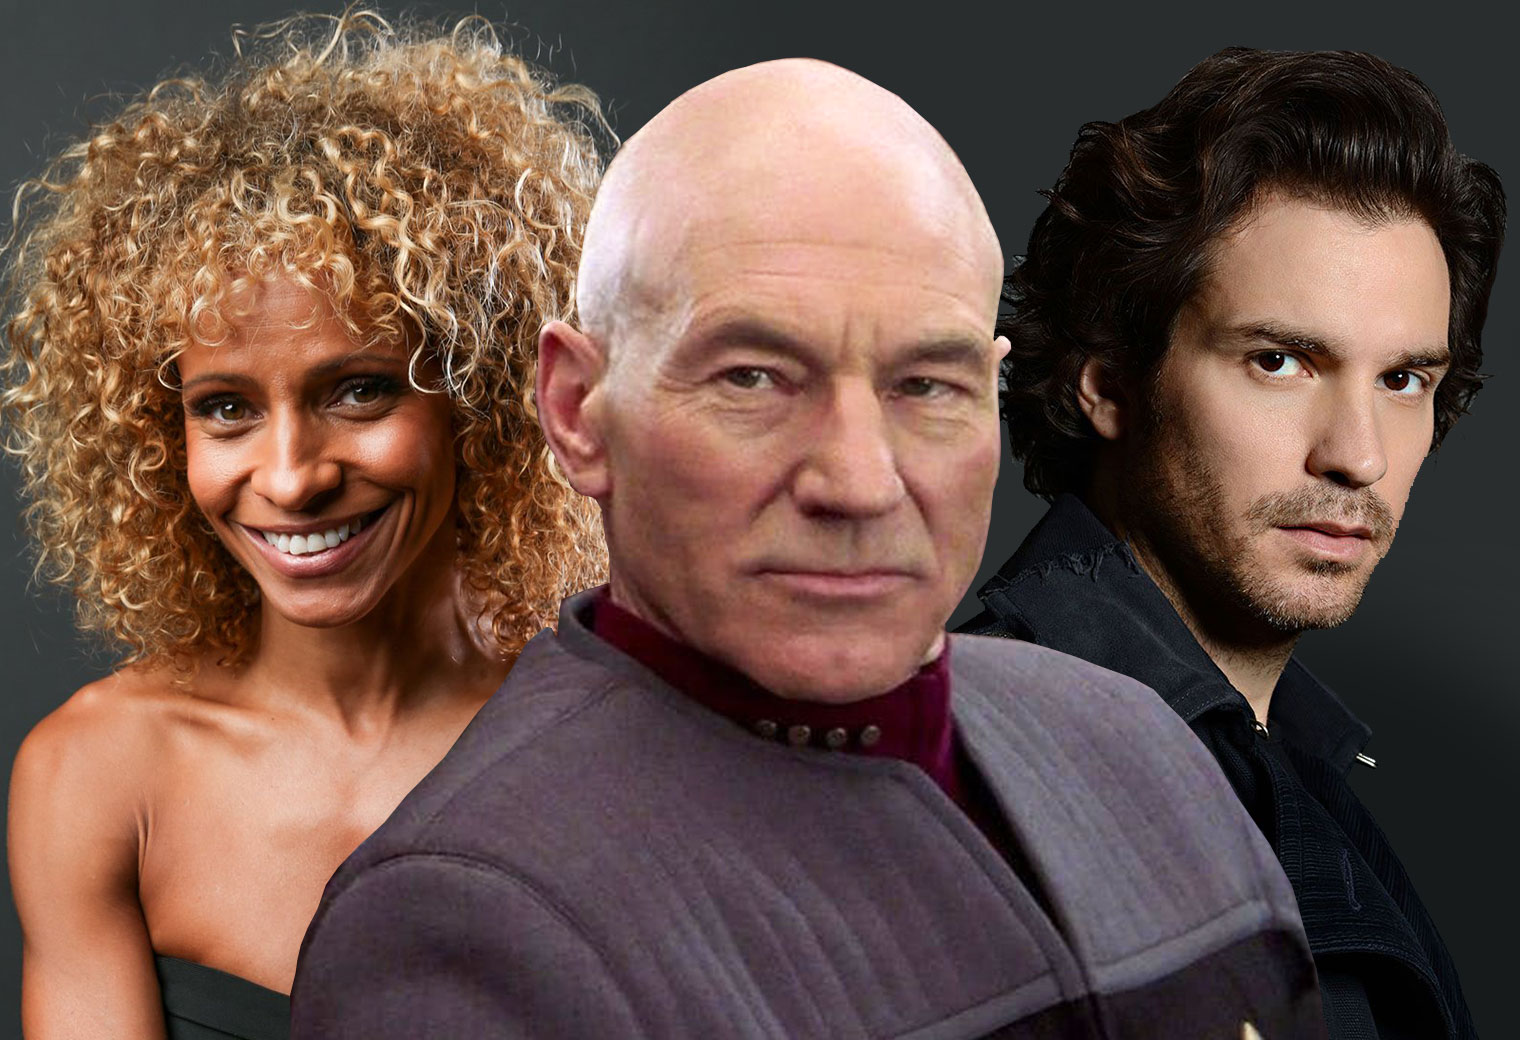 Star Trek “Picard” Series Adds Co-Stars Santiago Cabrera and Michelle Hurd